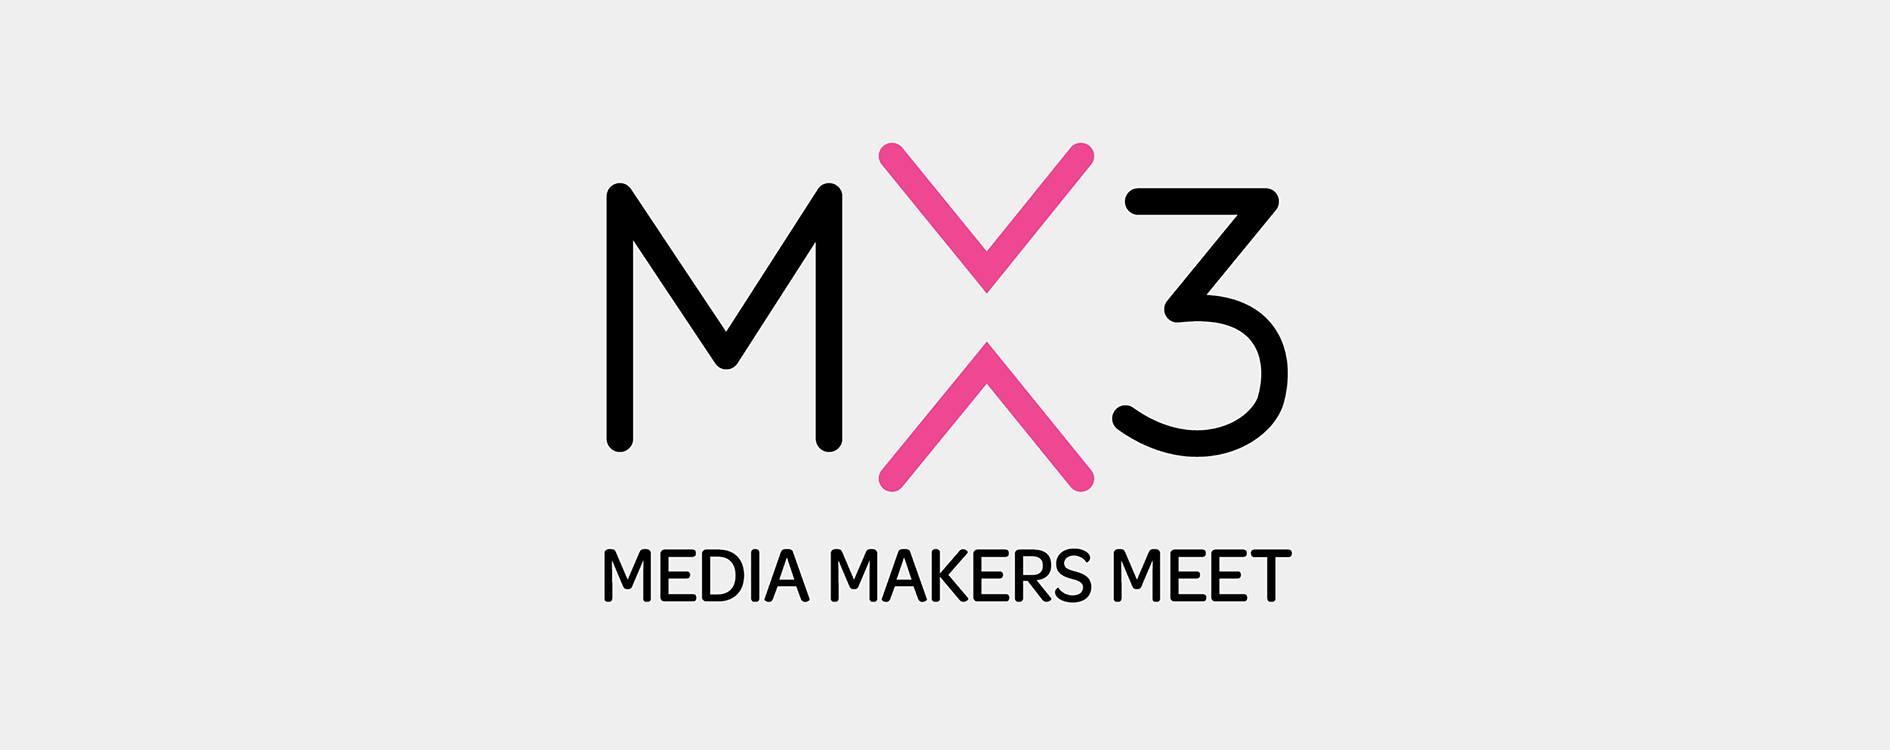 33A24_NewsMedia_Featured Banner_Media Makers Meet2